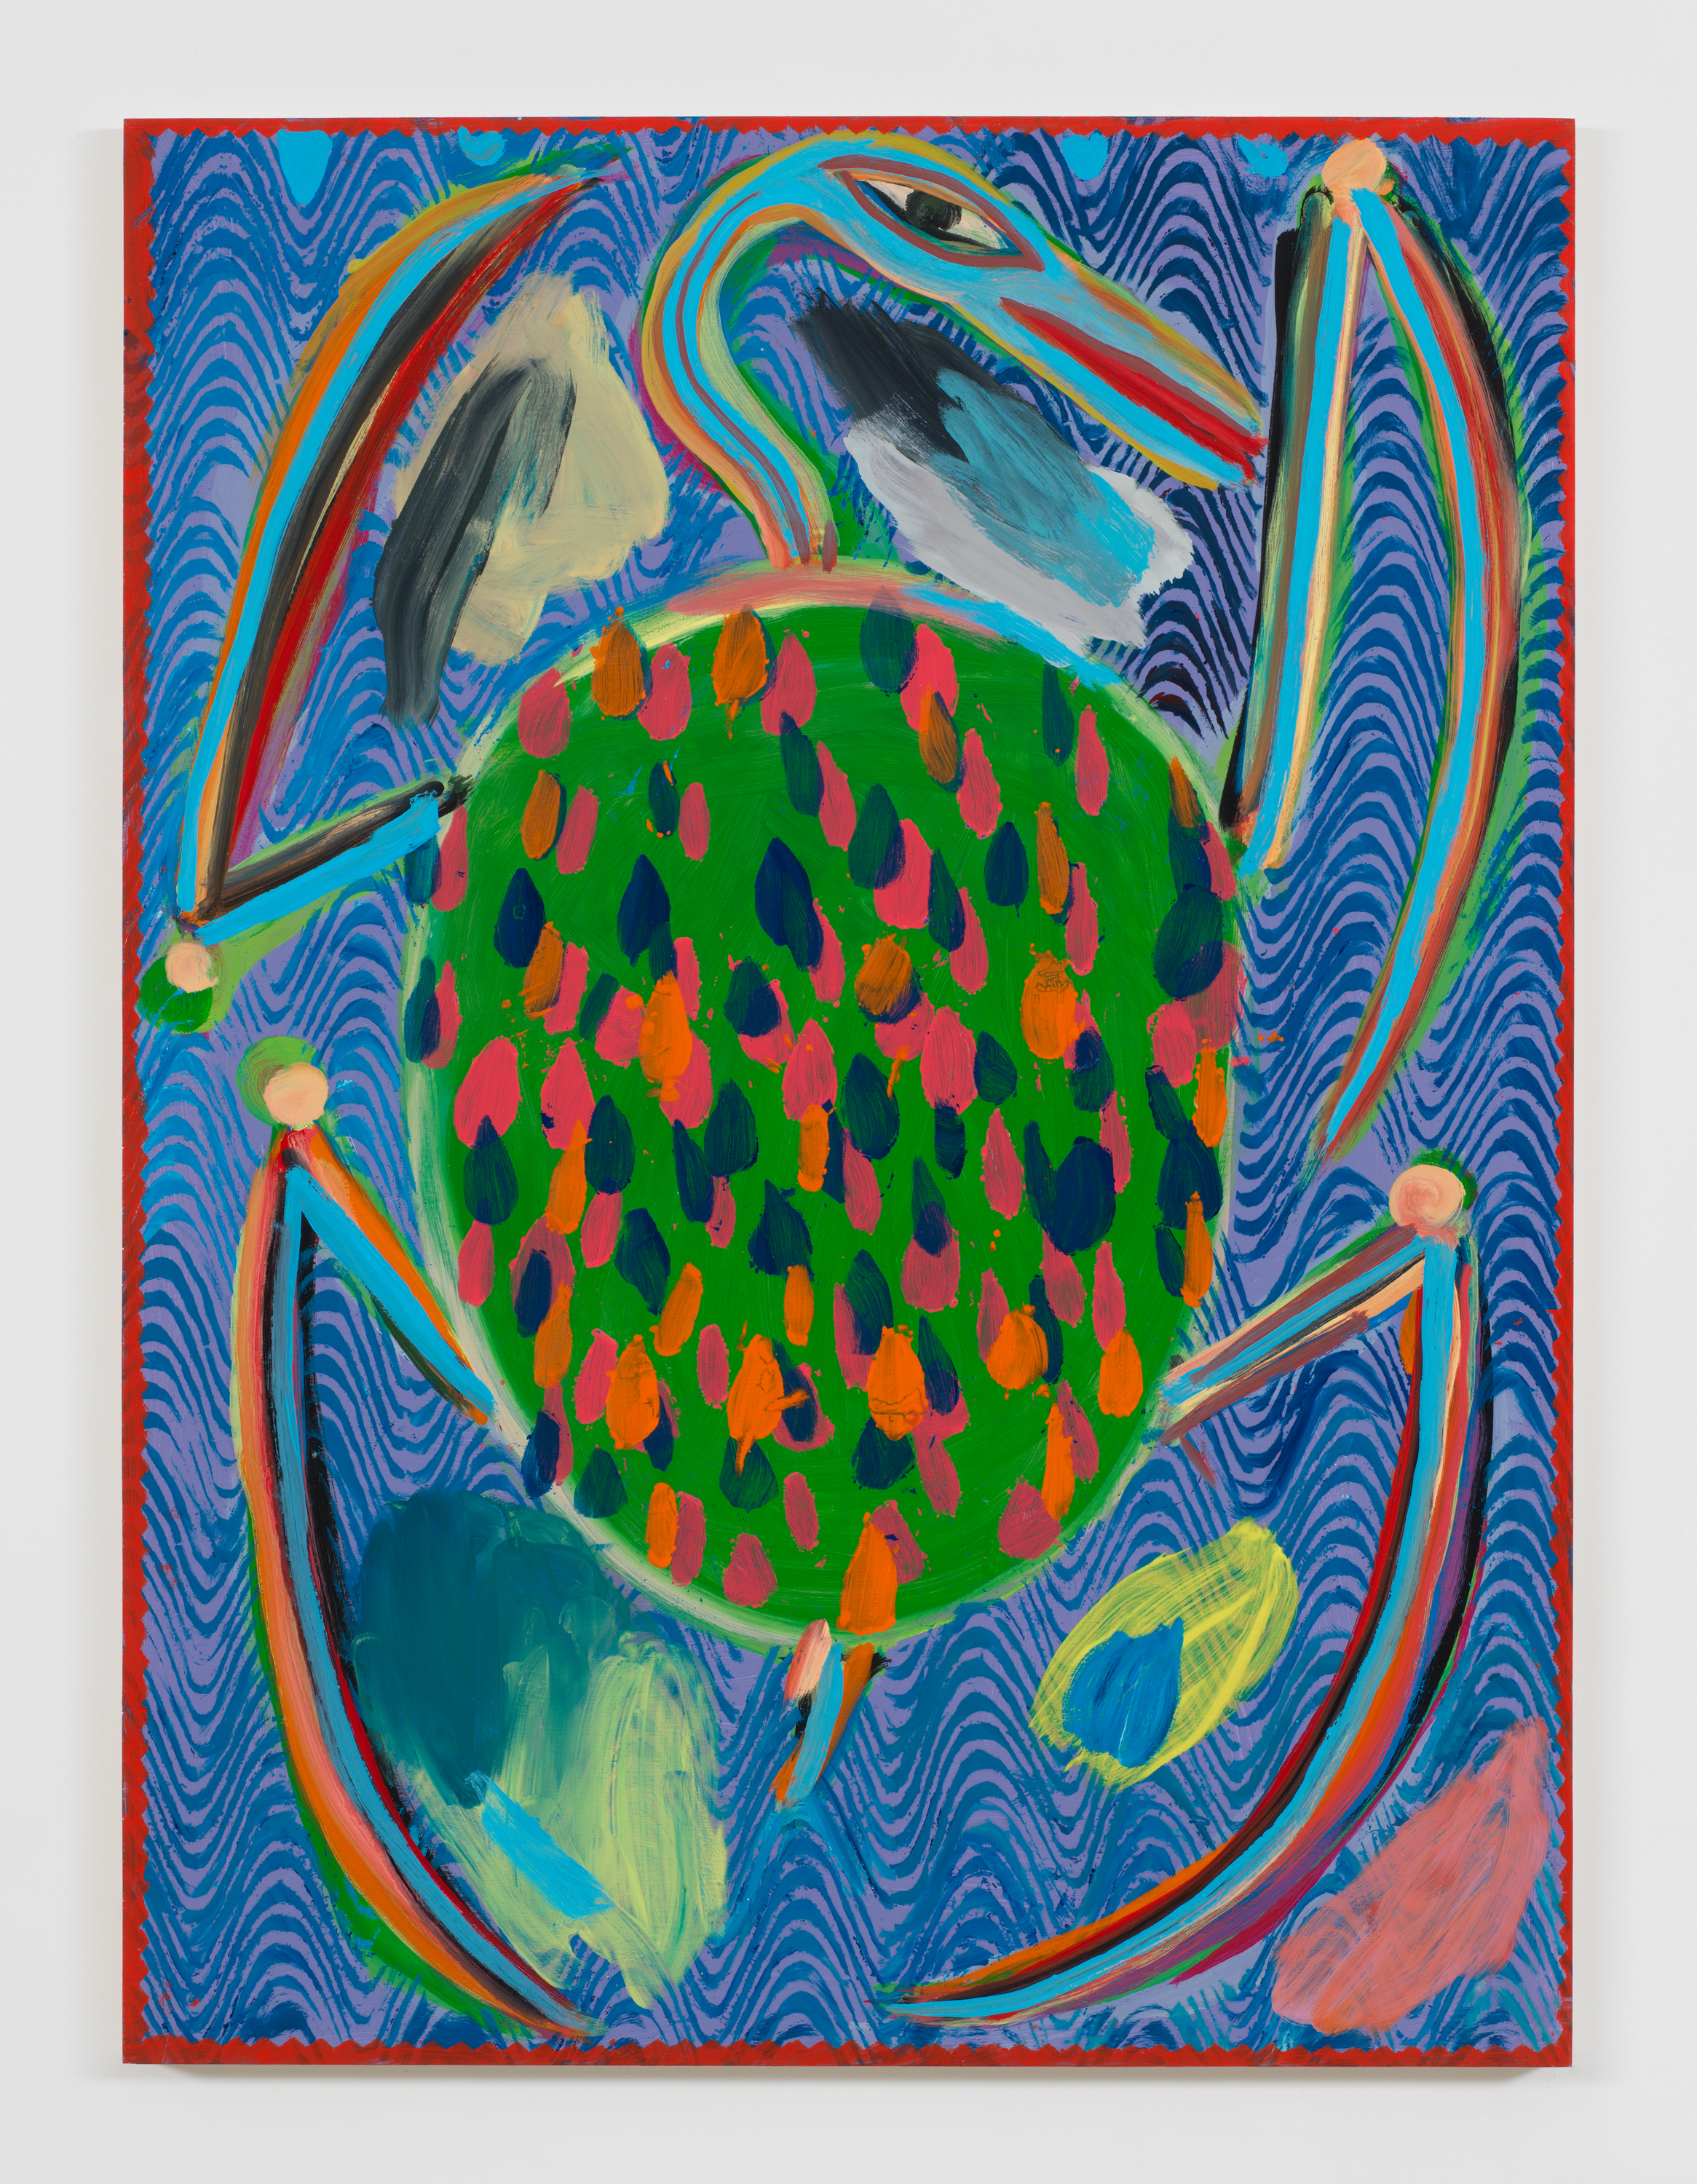   Josh Smith,   Turtle , 2019, Oil on wood panel, 48 x 35 3/4 inches, 121.9 x 90.8 cm 